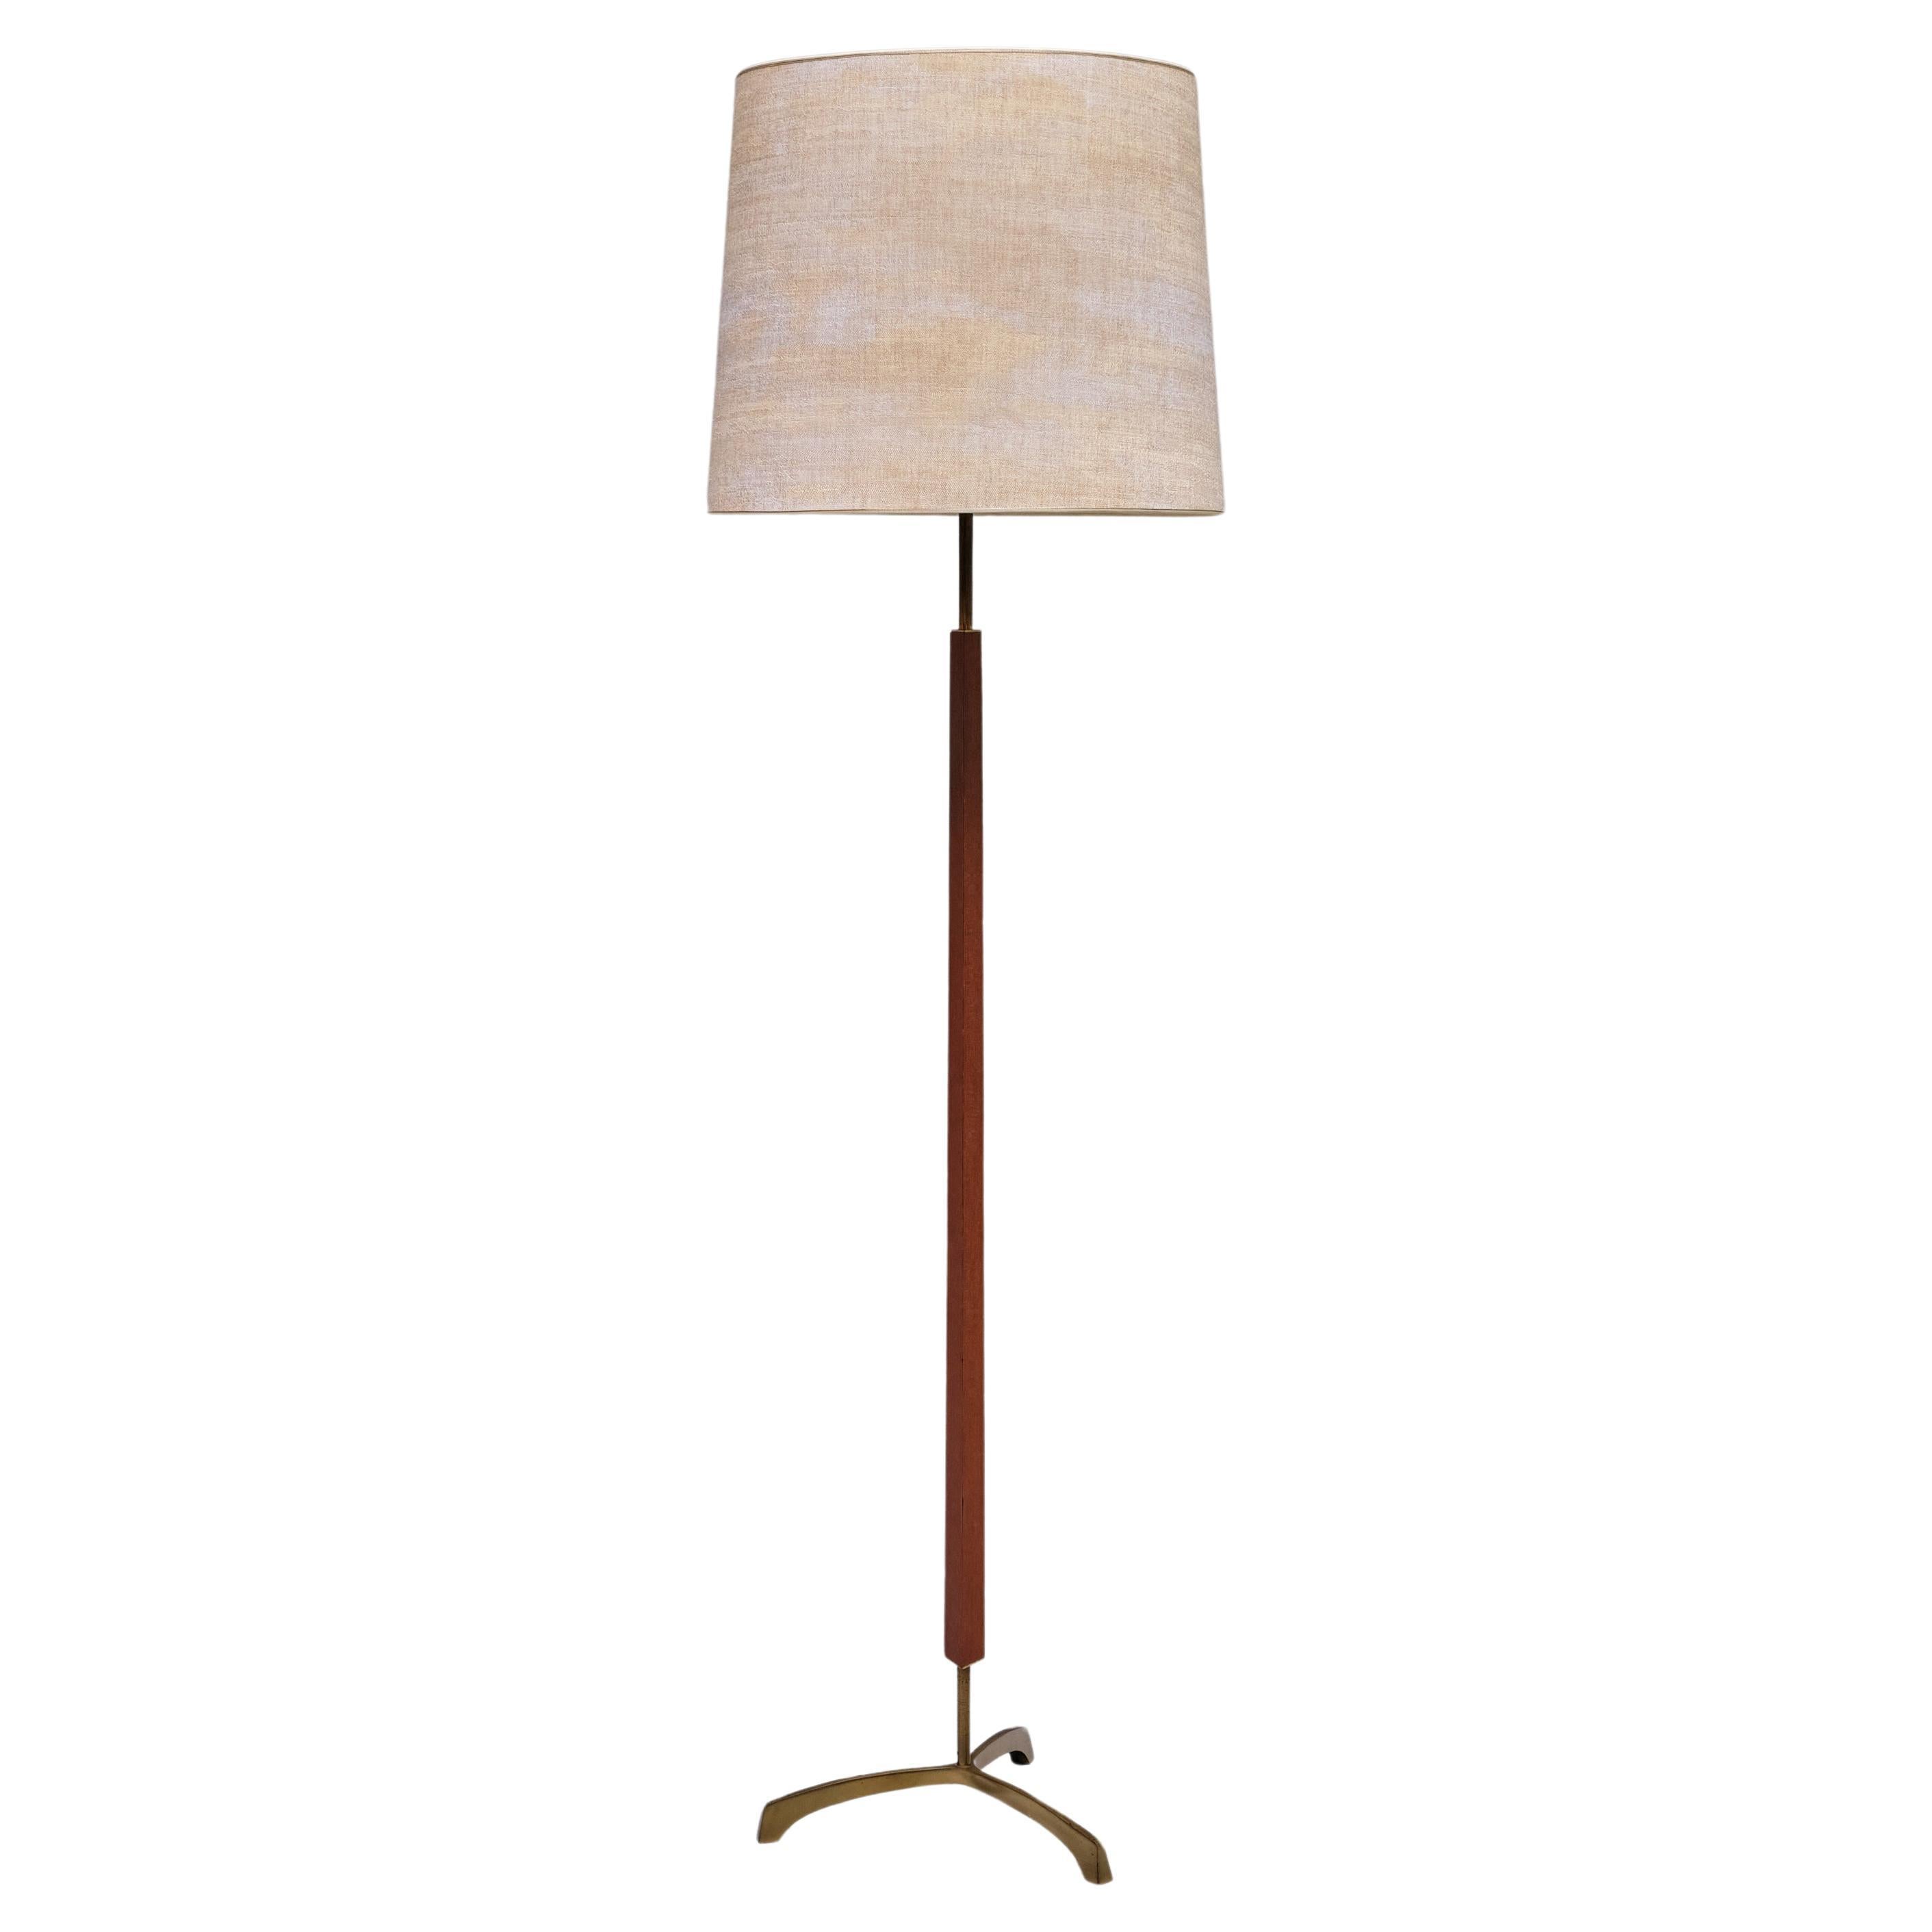 Danish Modern Three Legged Floor Lamp in Brass, Teak and Textured Shade, 1950s